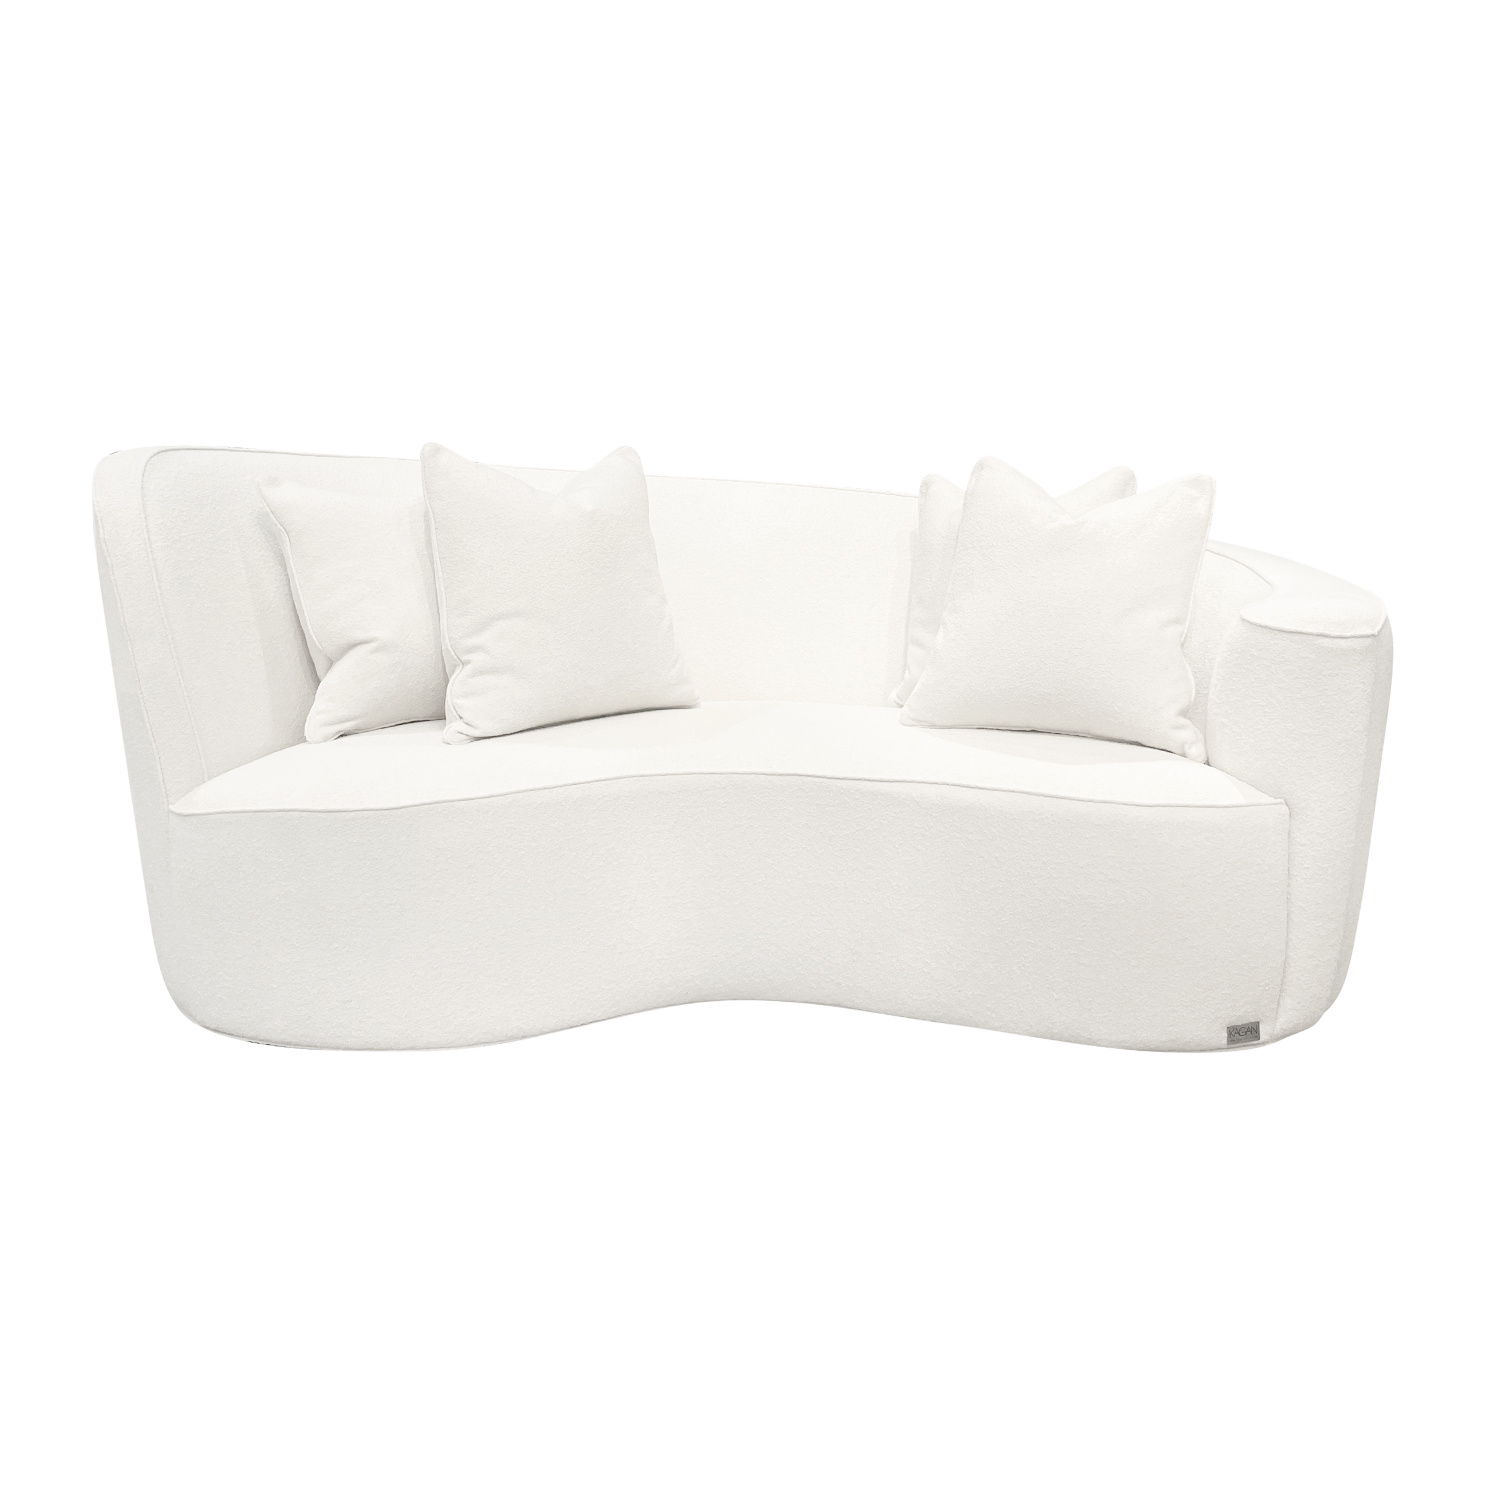 1960s White American Four Seater Sofa – Vintage Settee by Vladimir Kagan